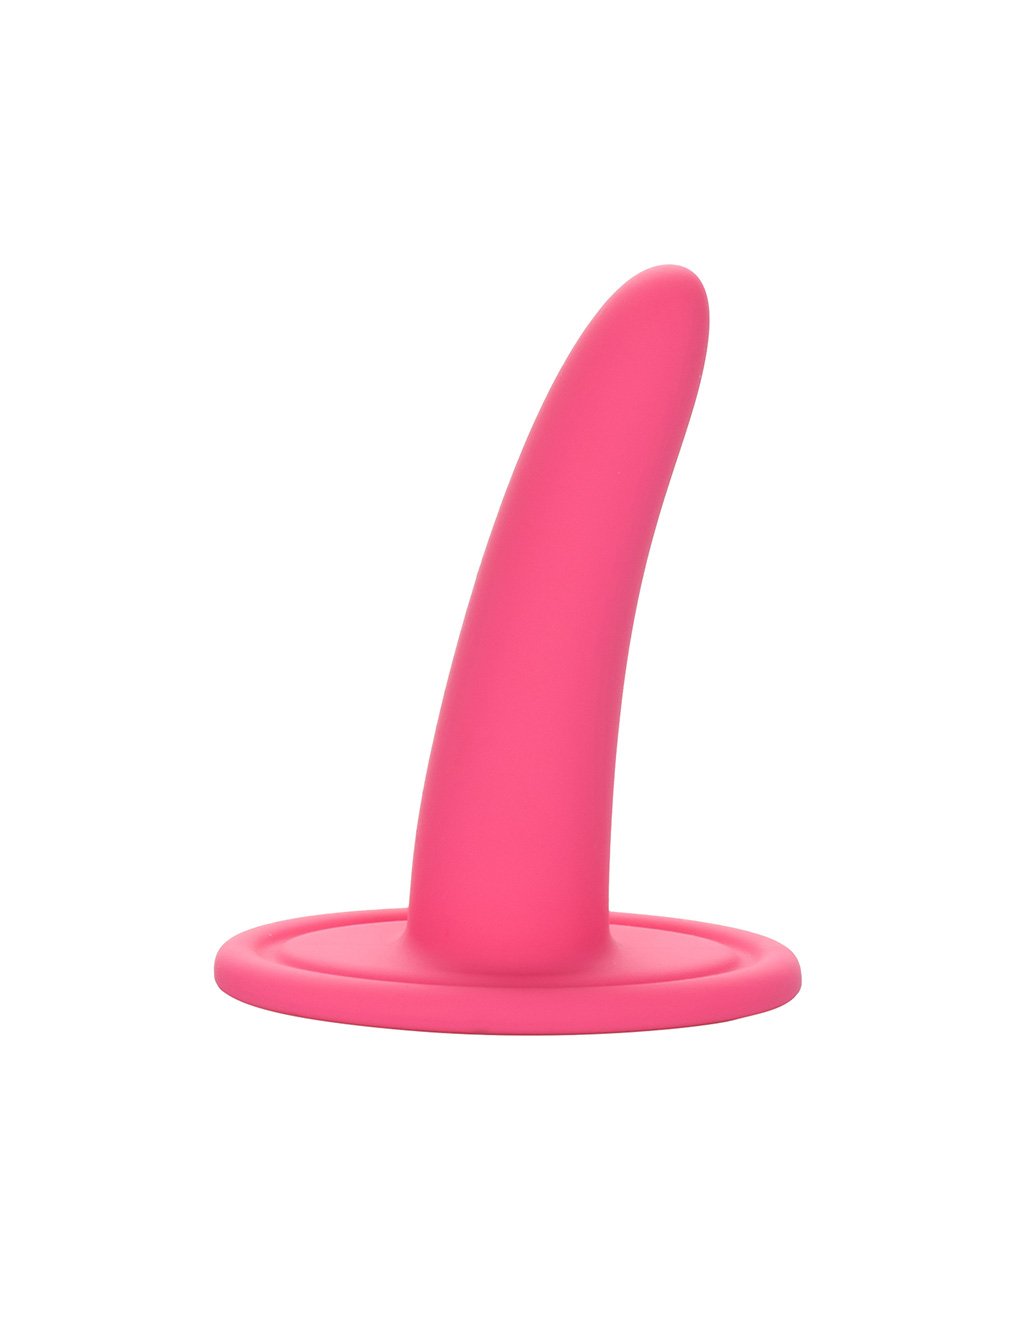 She-Ology 5 Piece Vaginal Dilator Set- Medium hot pink